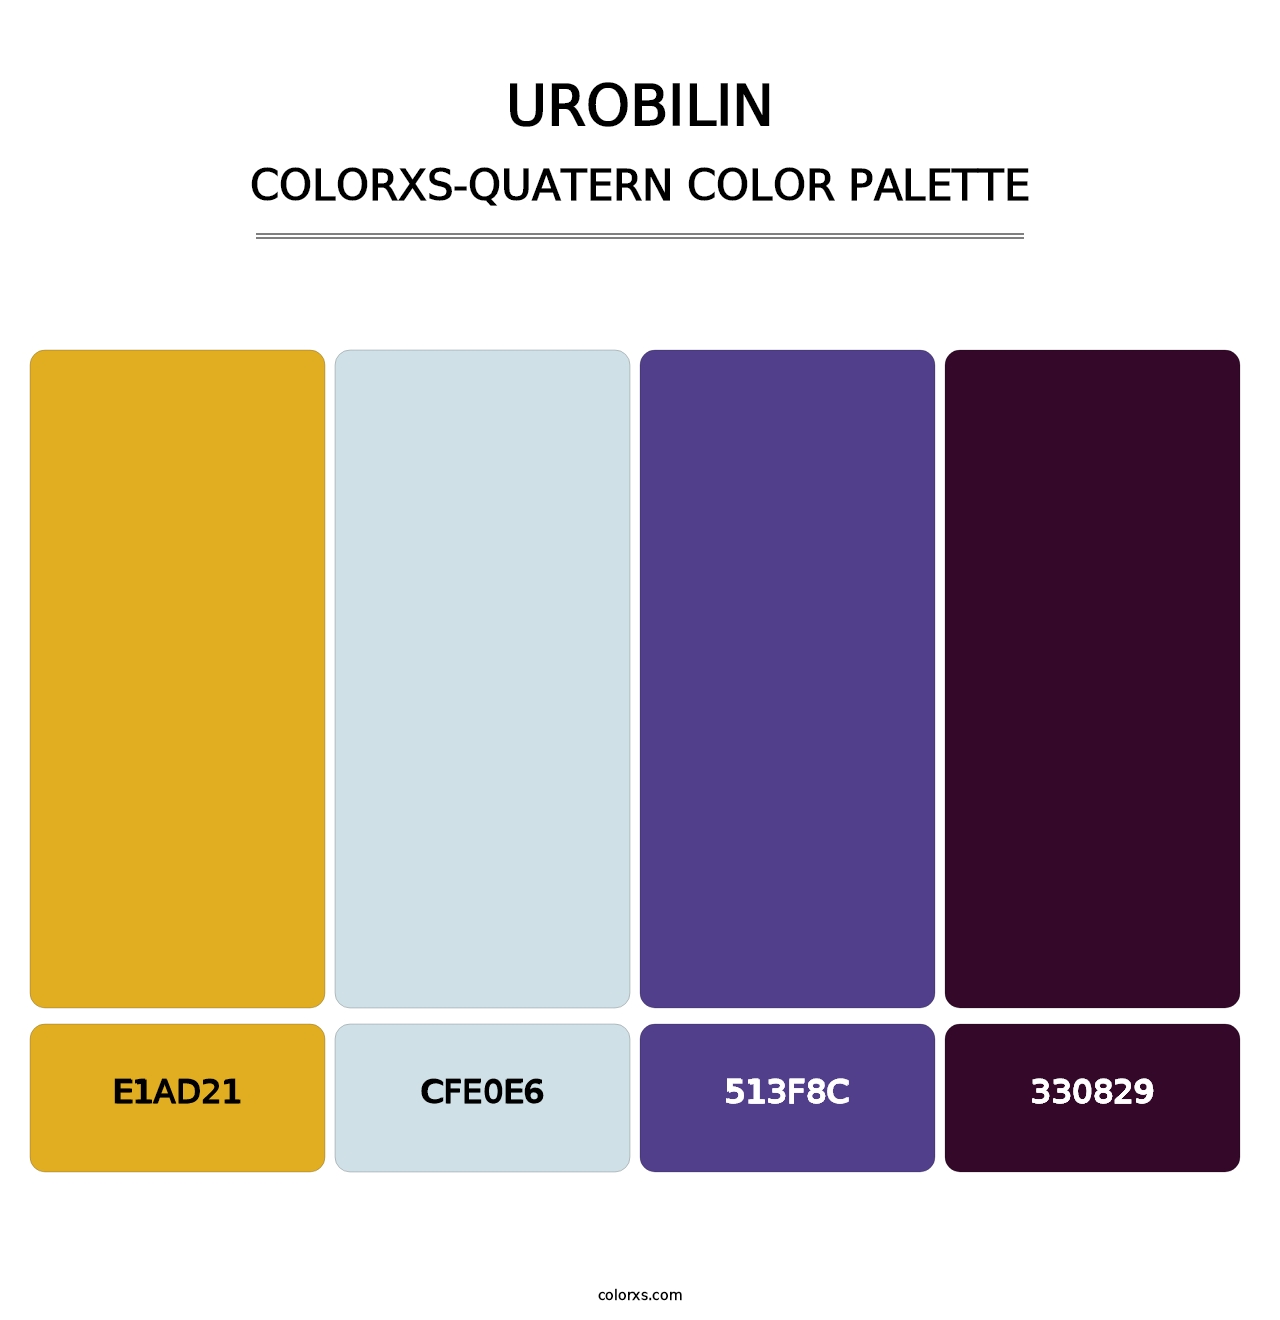 Urobilin - Colorxs Quatern Palette